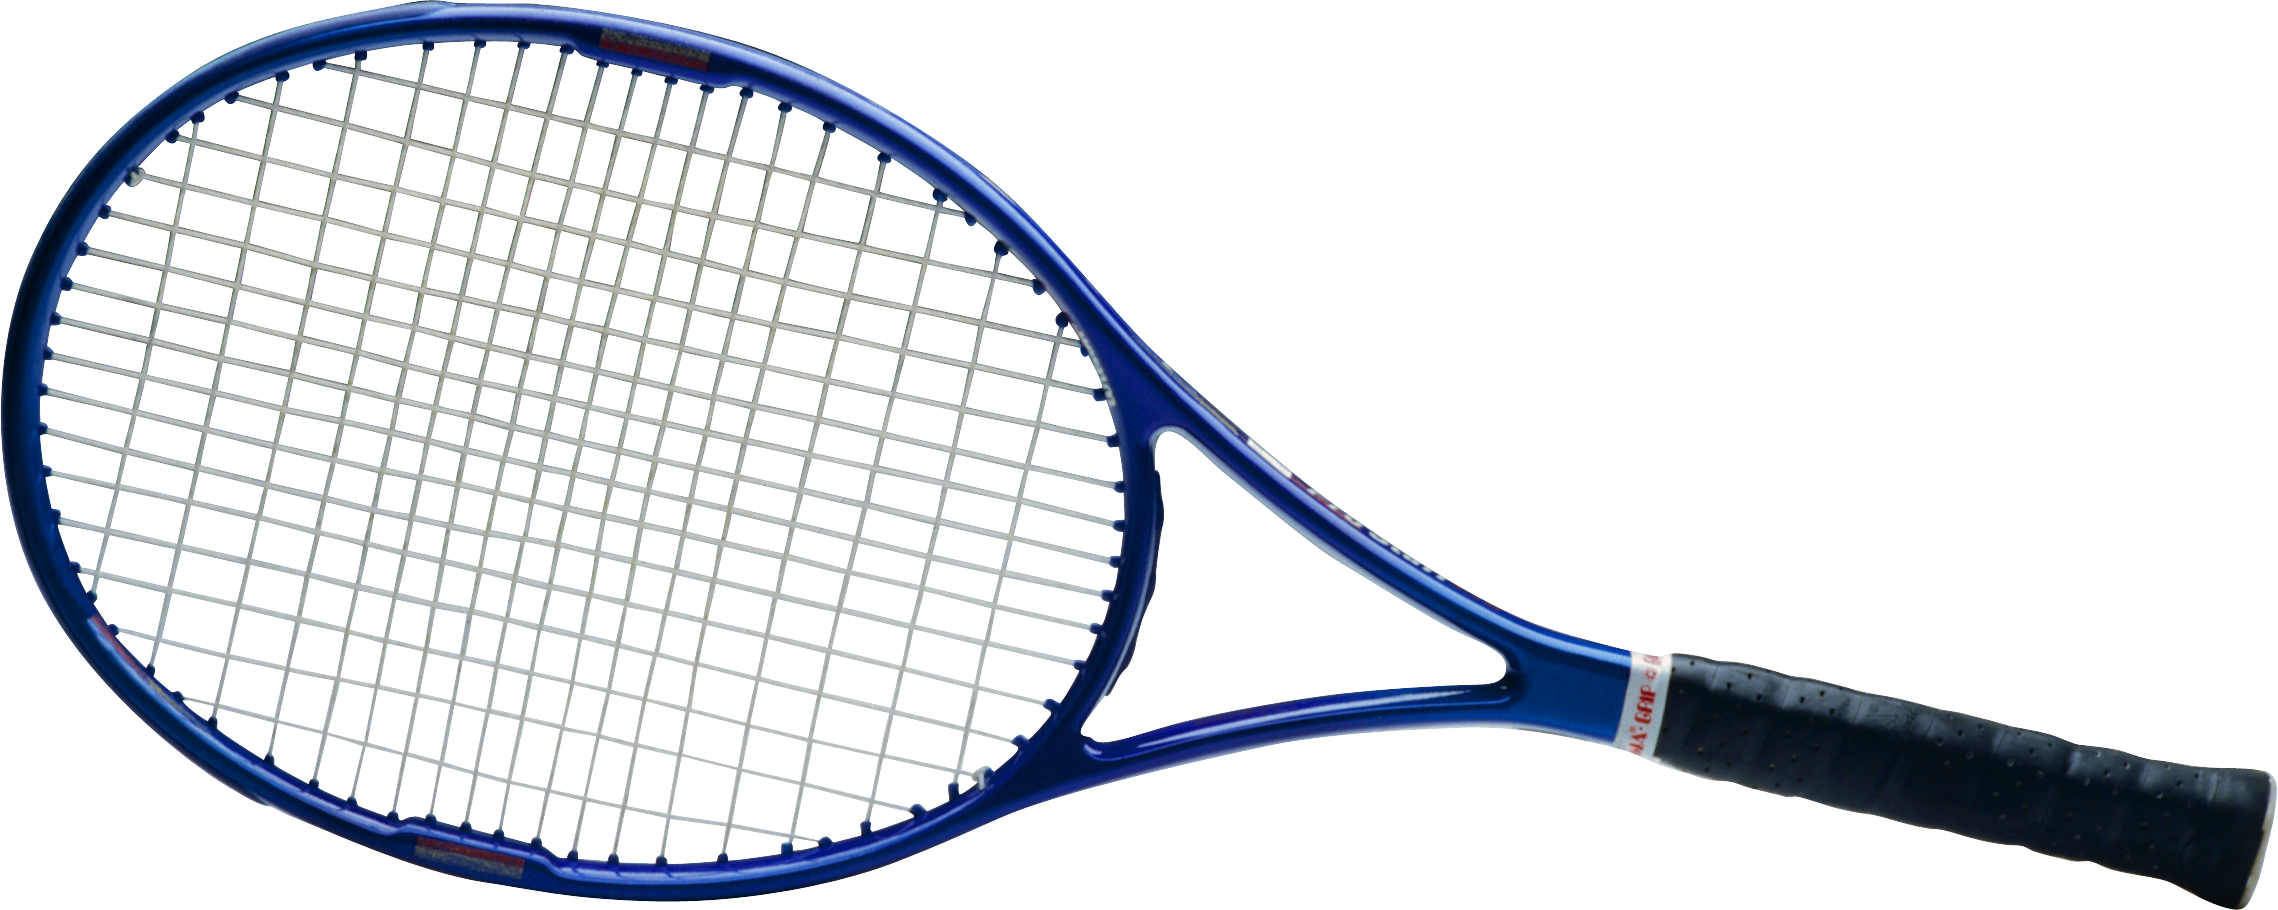 Tennis Racket PNG Image